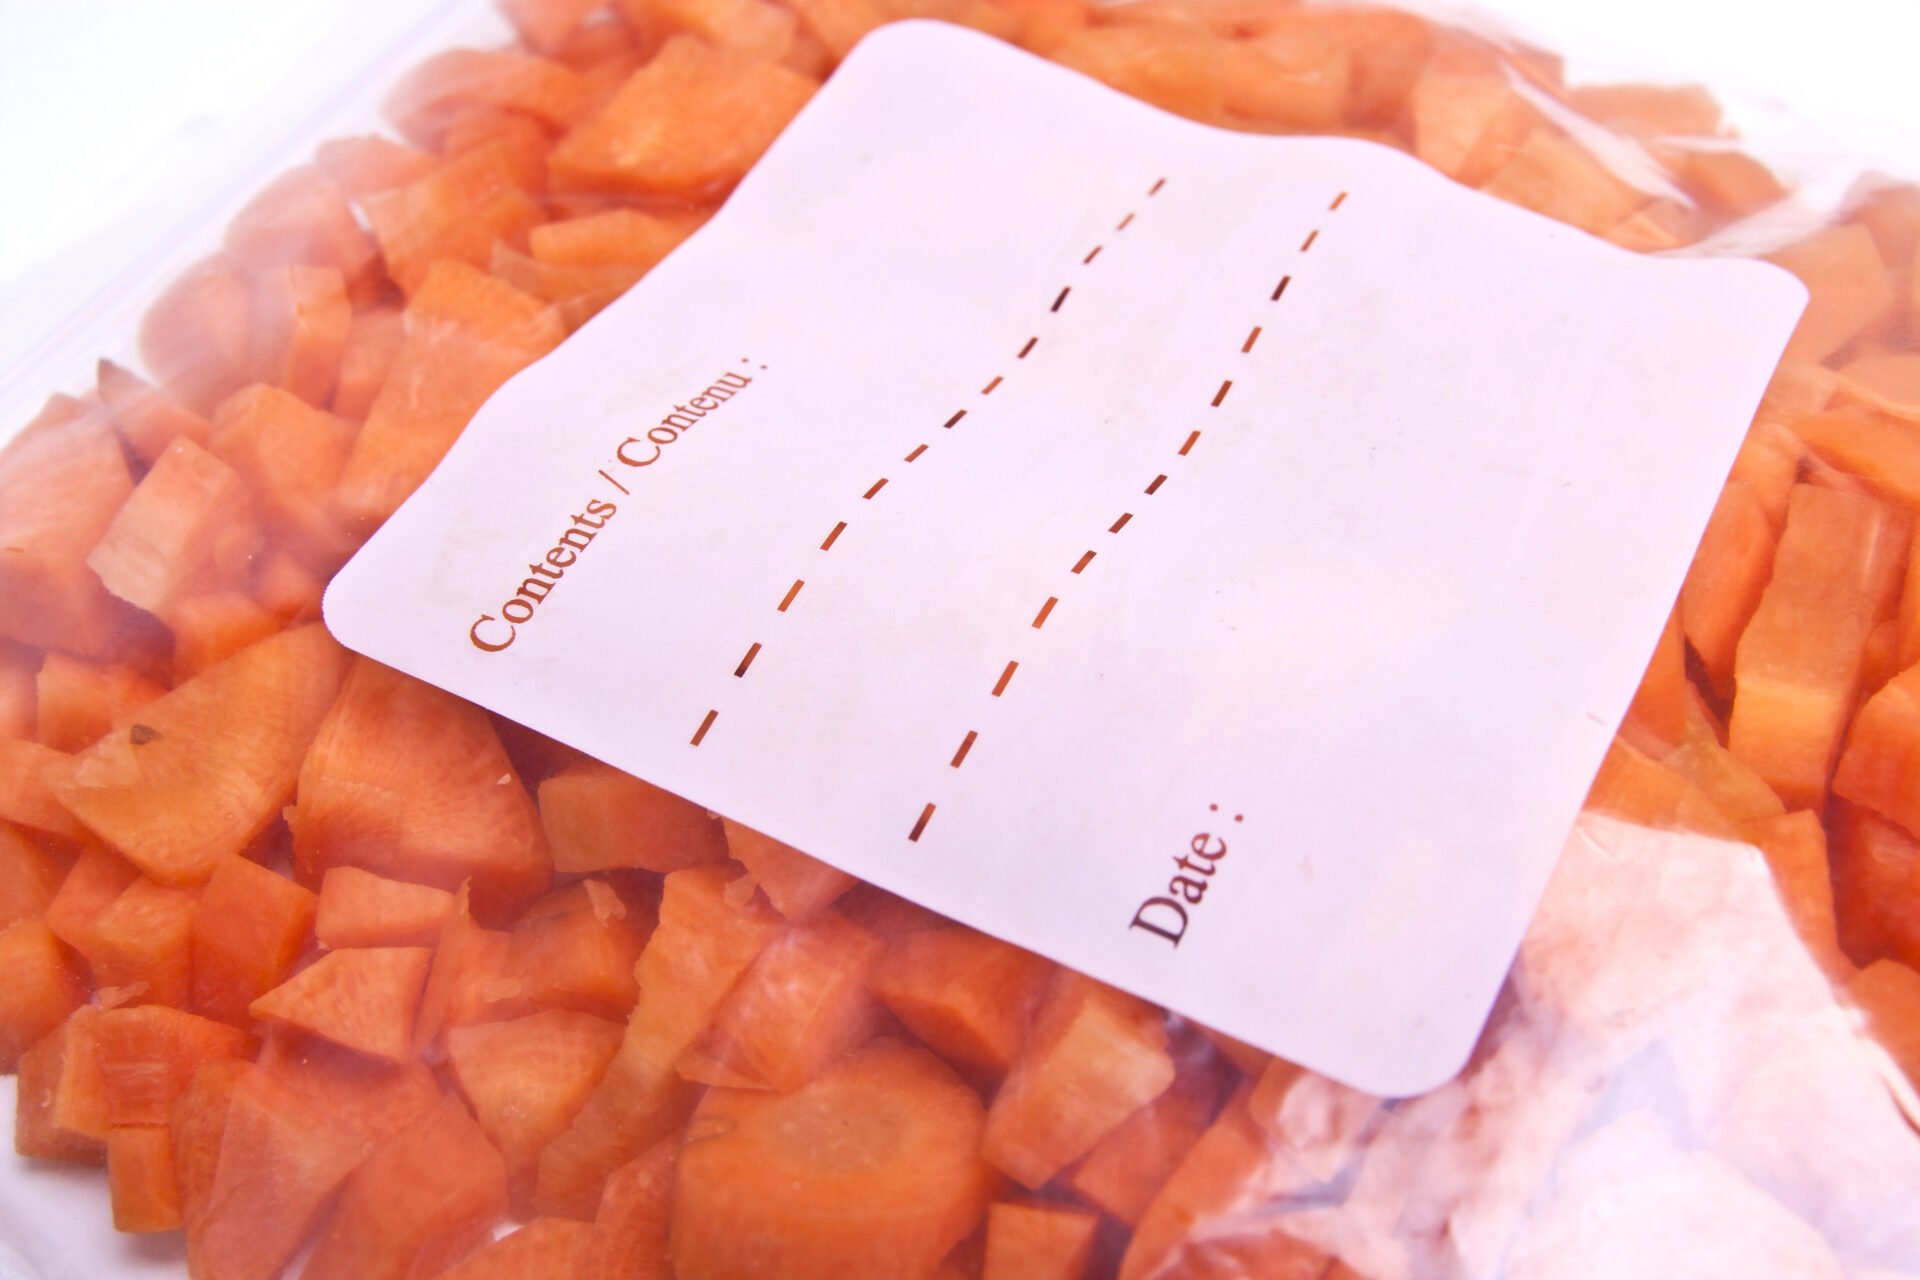 plastic sandwich bag with cut carrots inside